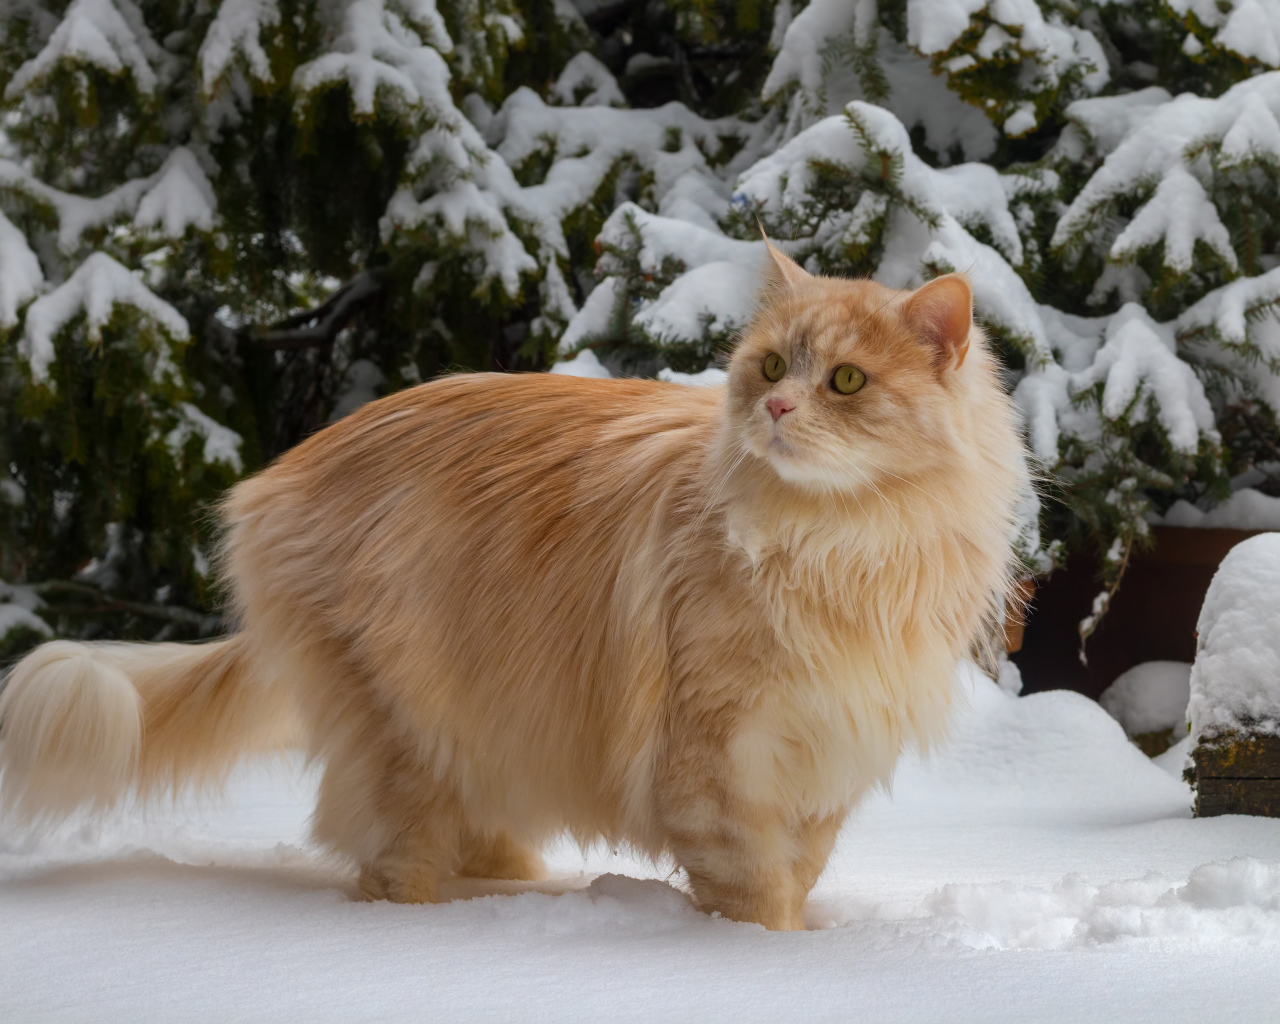 Beautiful fluffy red cat by a snowy fir